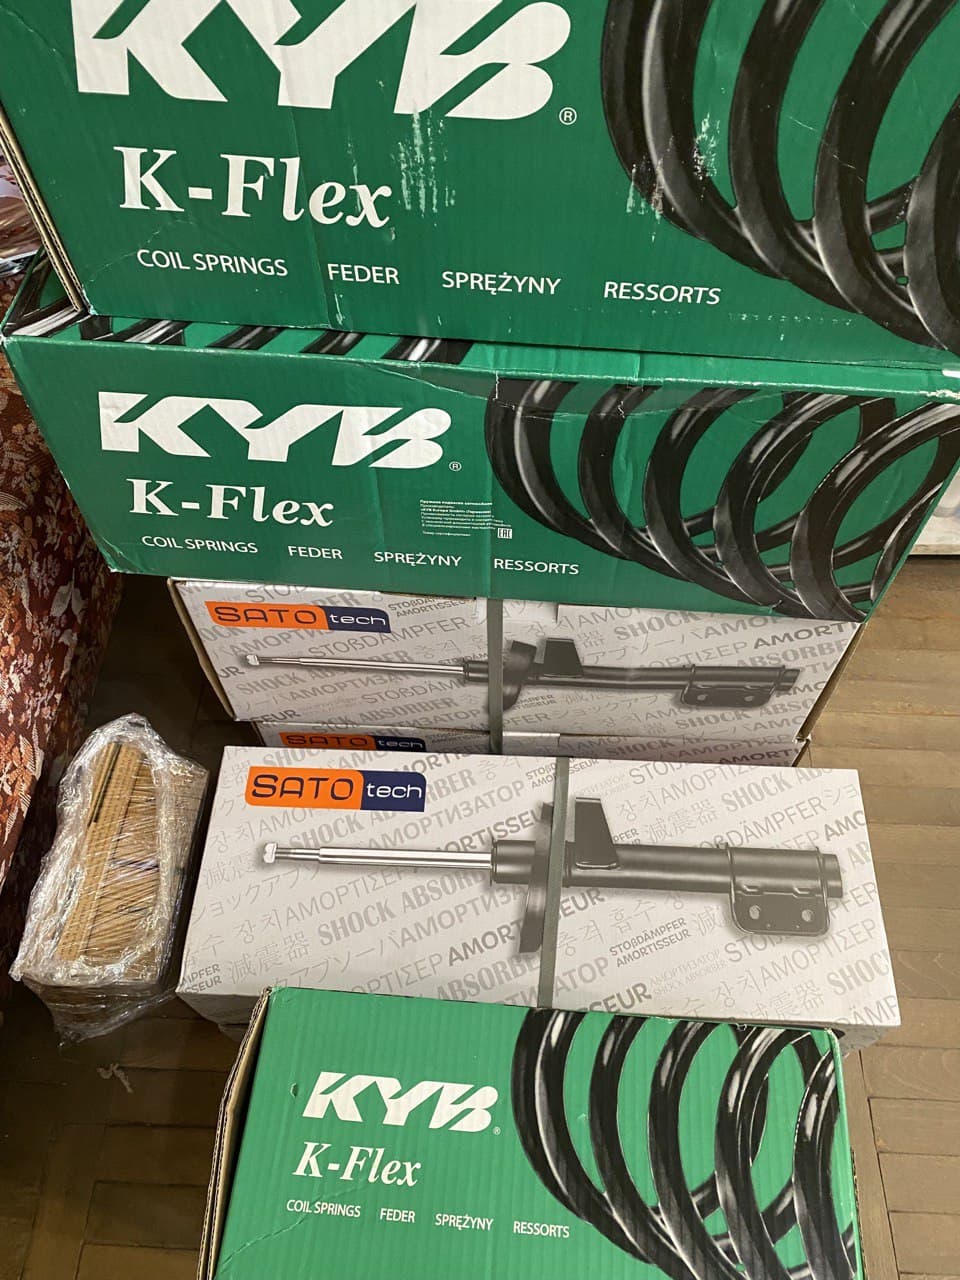  K-Flex